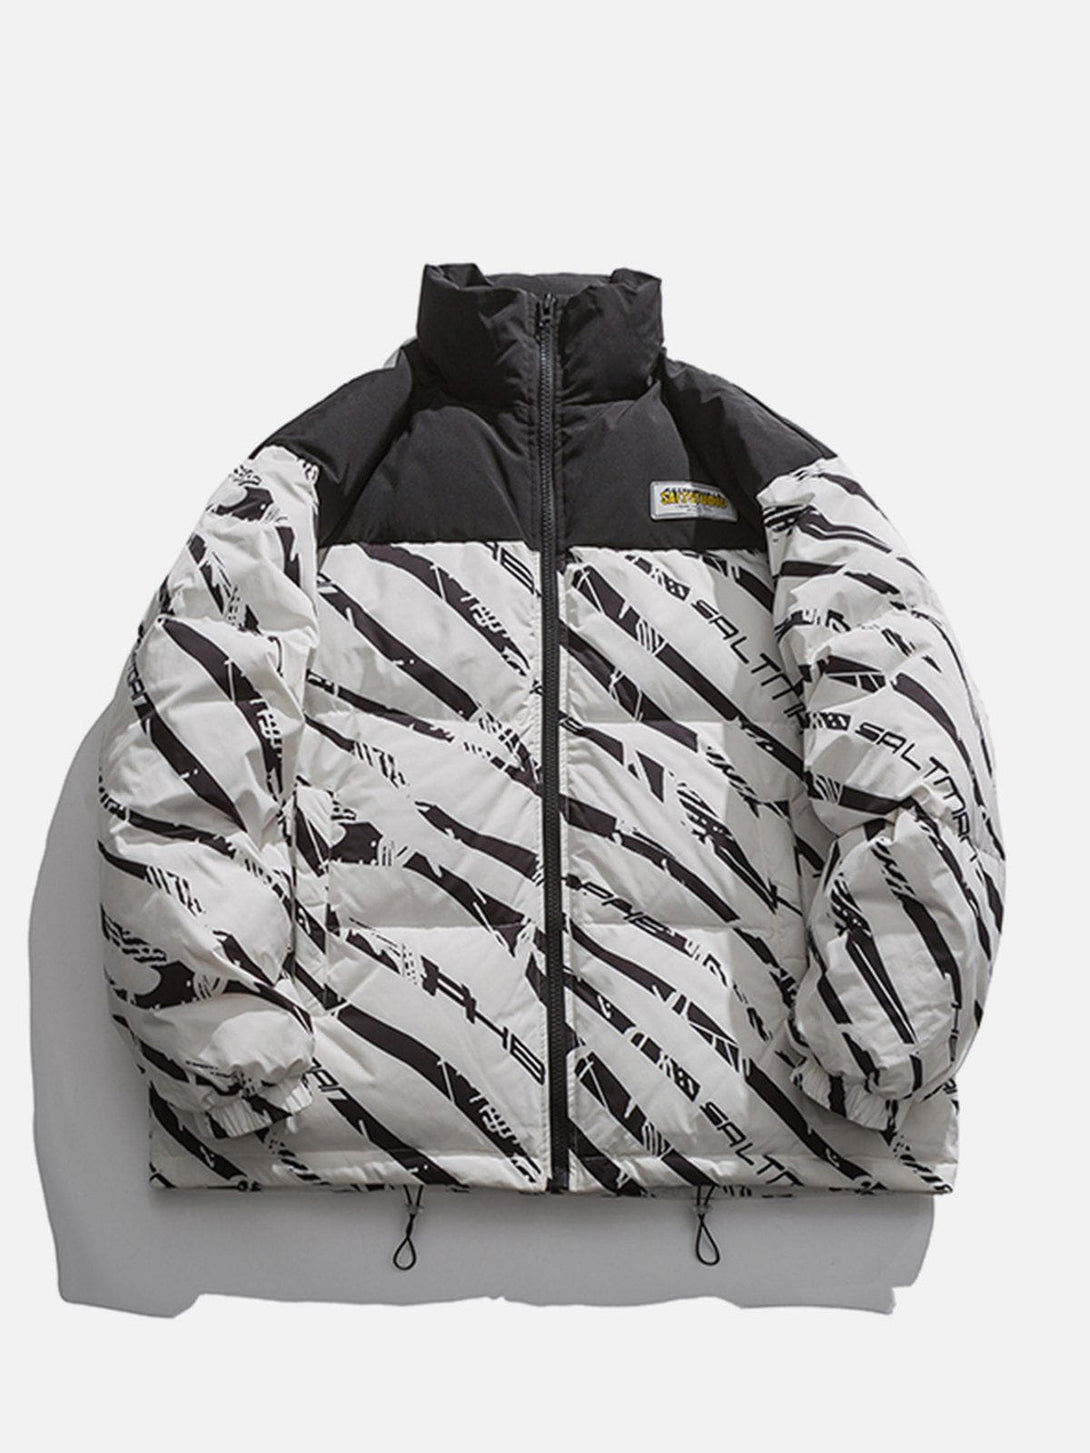 Majesda® - Zebra Print Splicing Winter Coat outfit ideas streetwear fashion